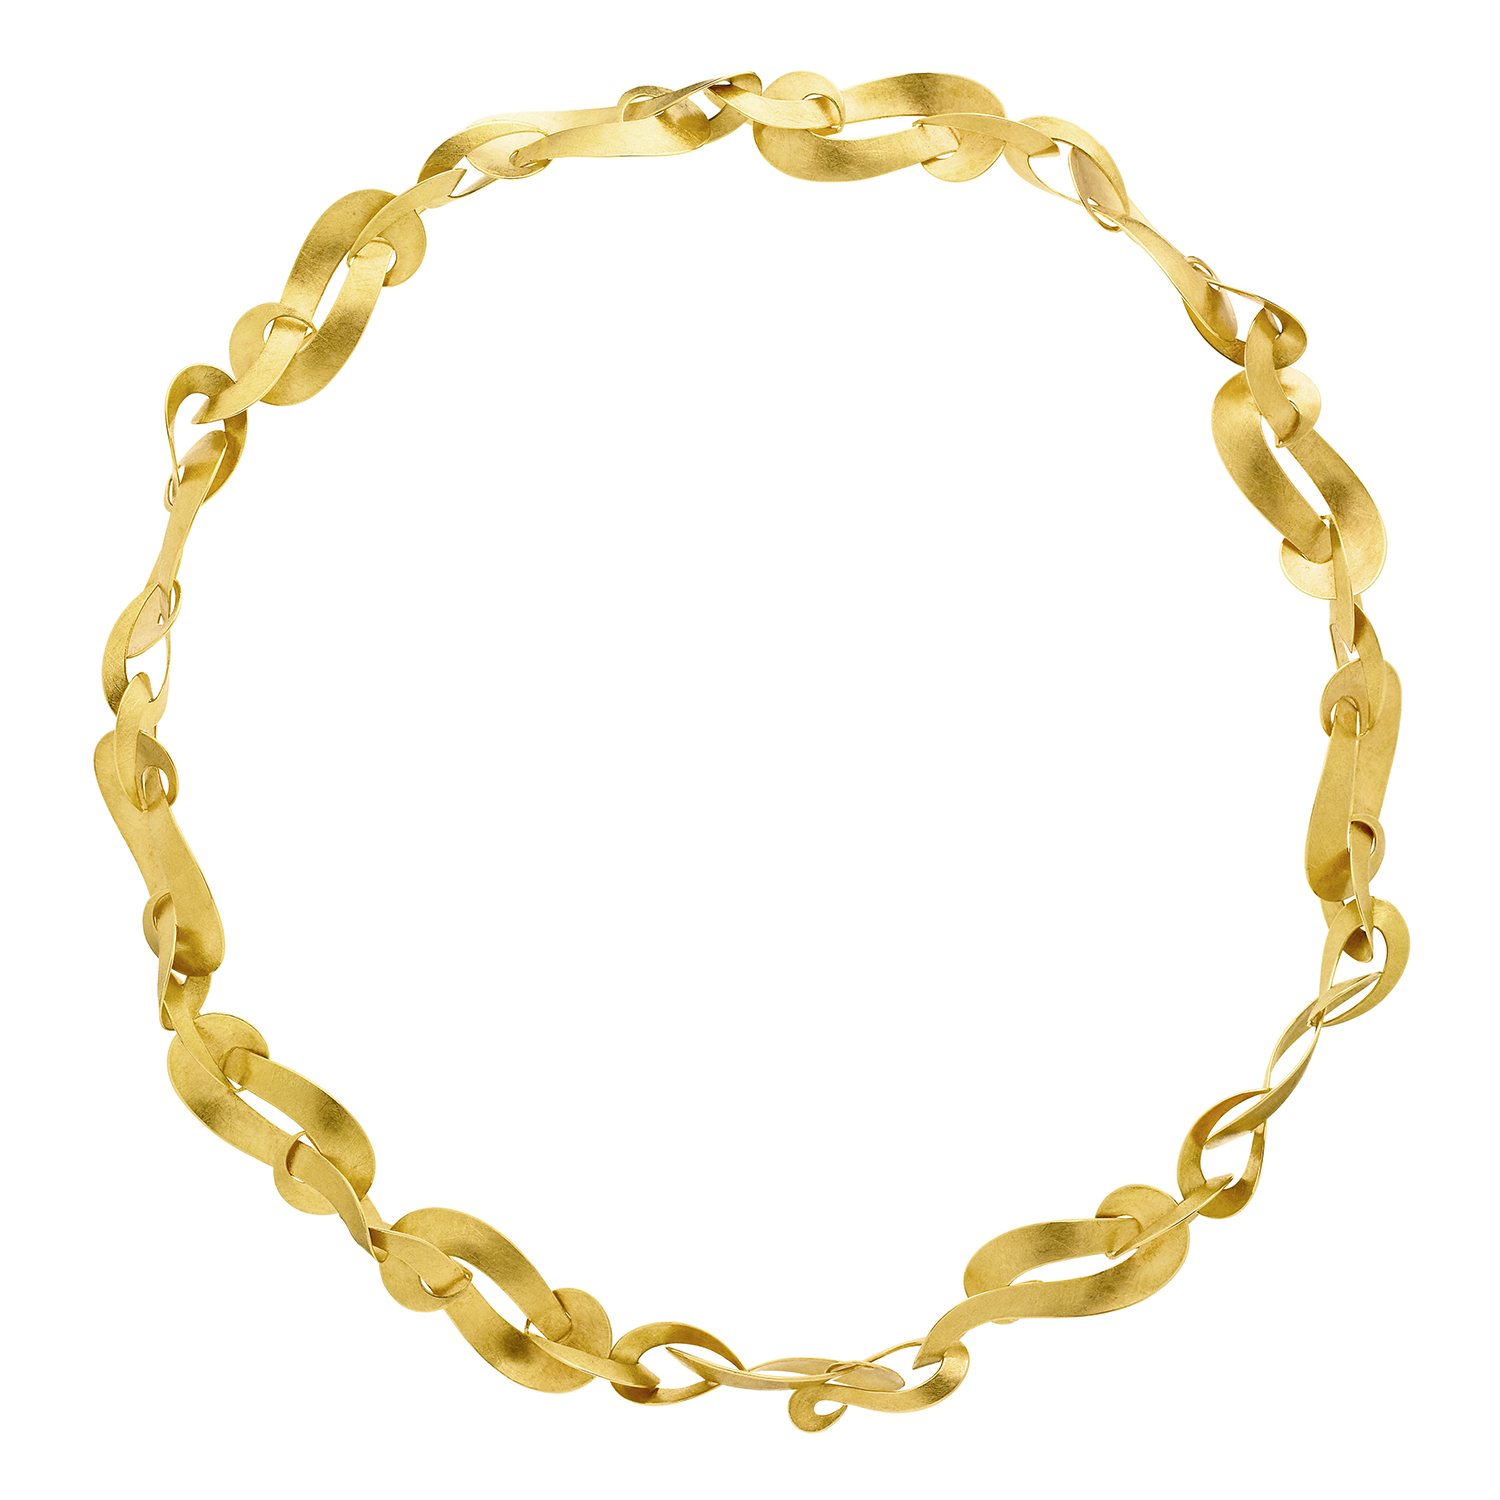 golden necklace with subtle clasp